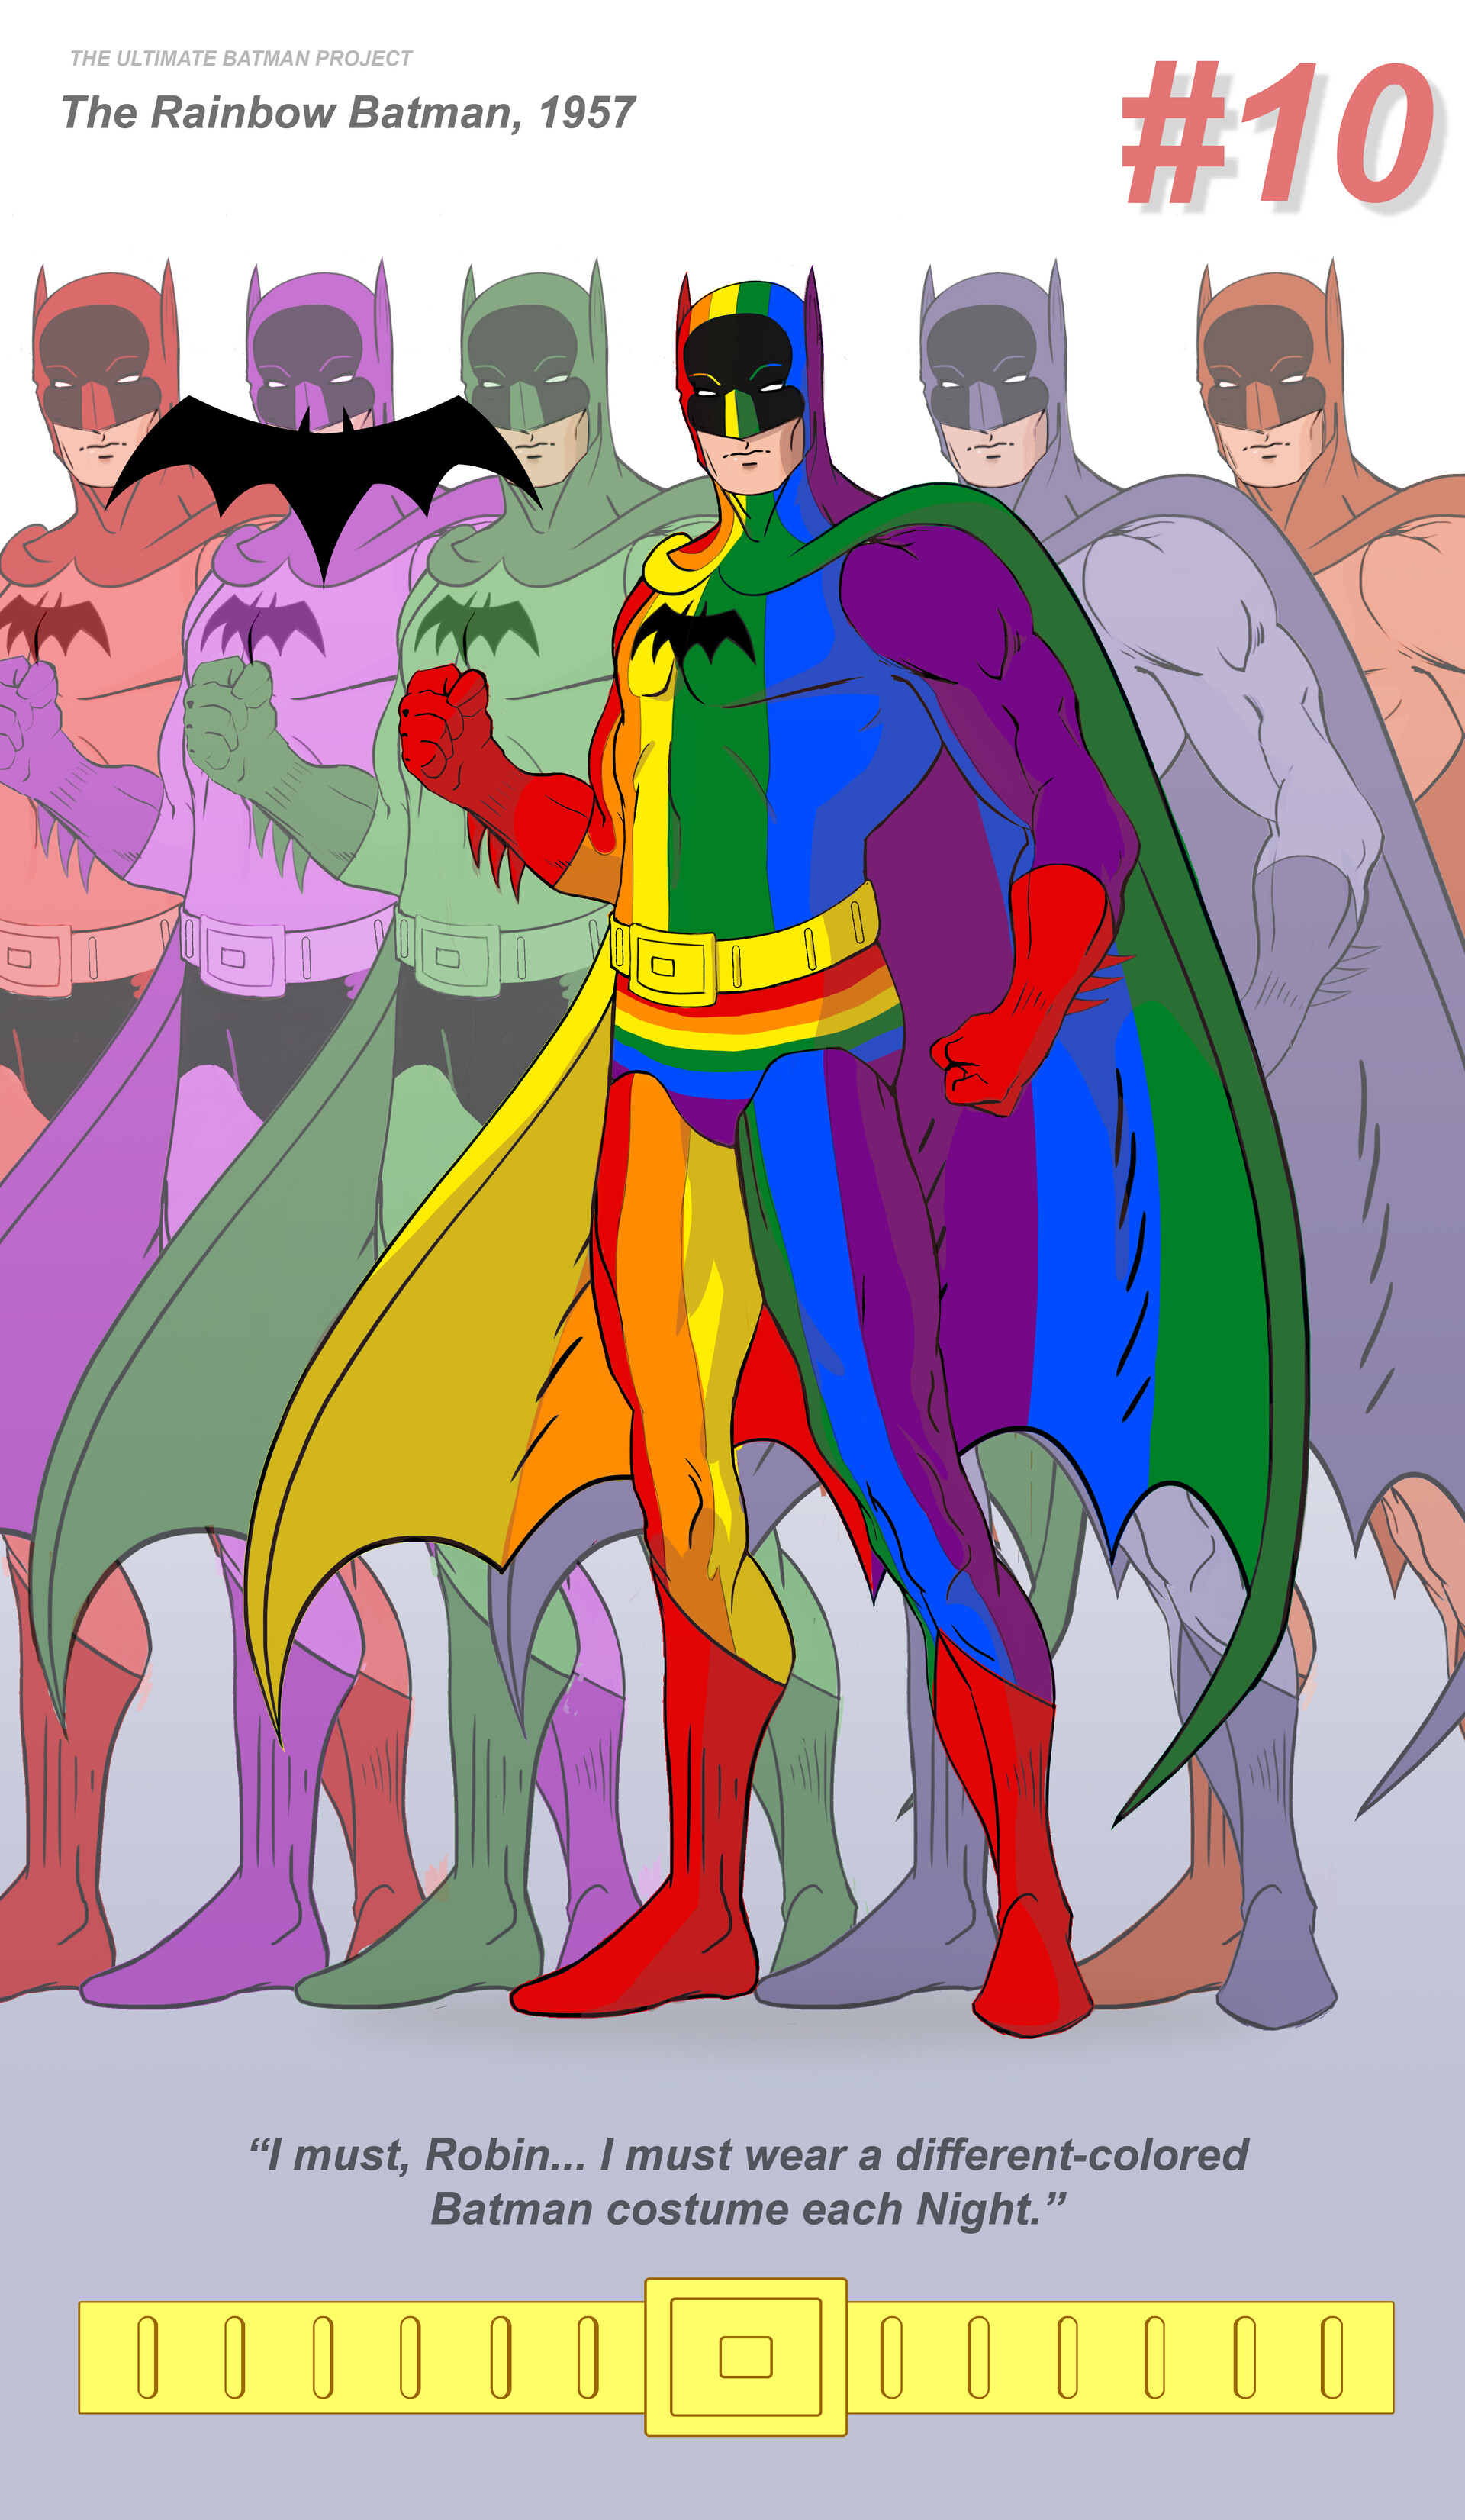 ArtStation - The Ultimate Batman Project: Costume #10 The Rainbow Batman